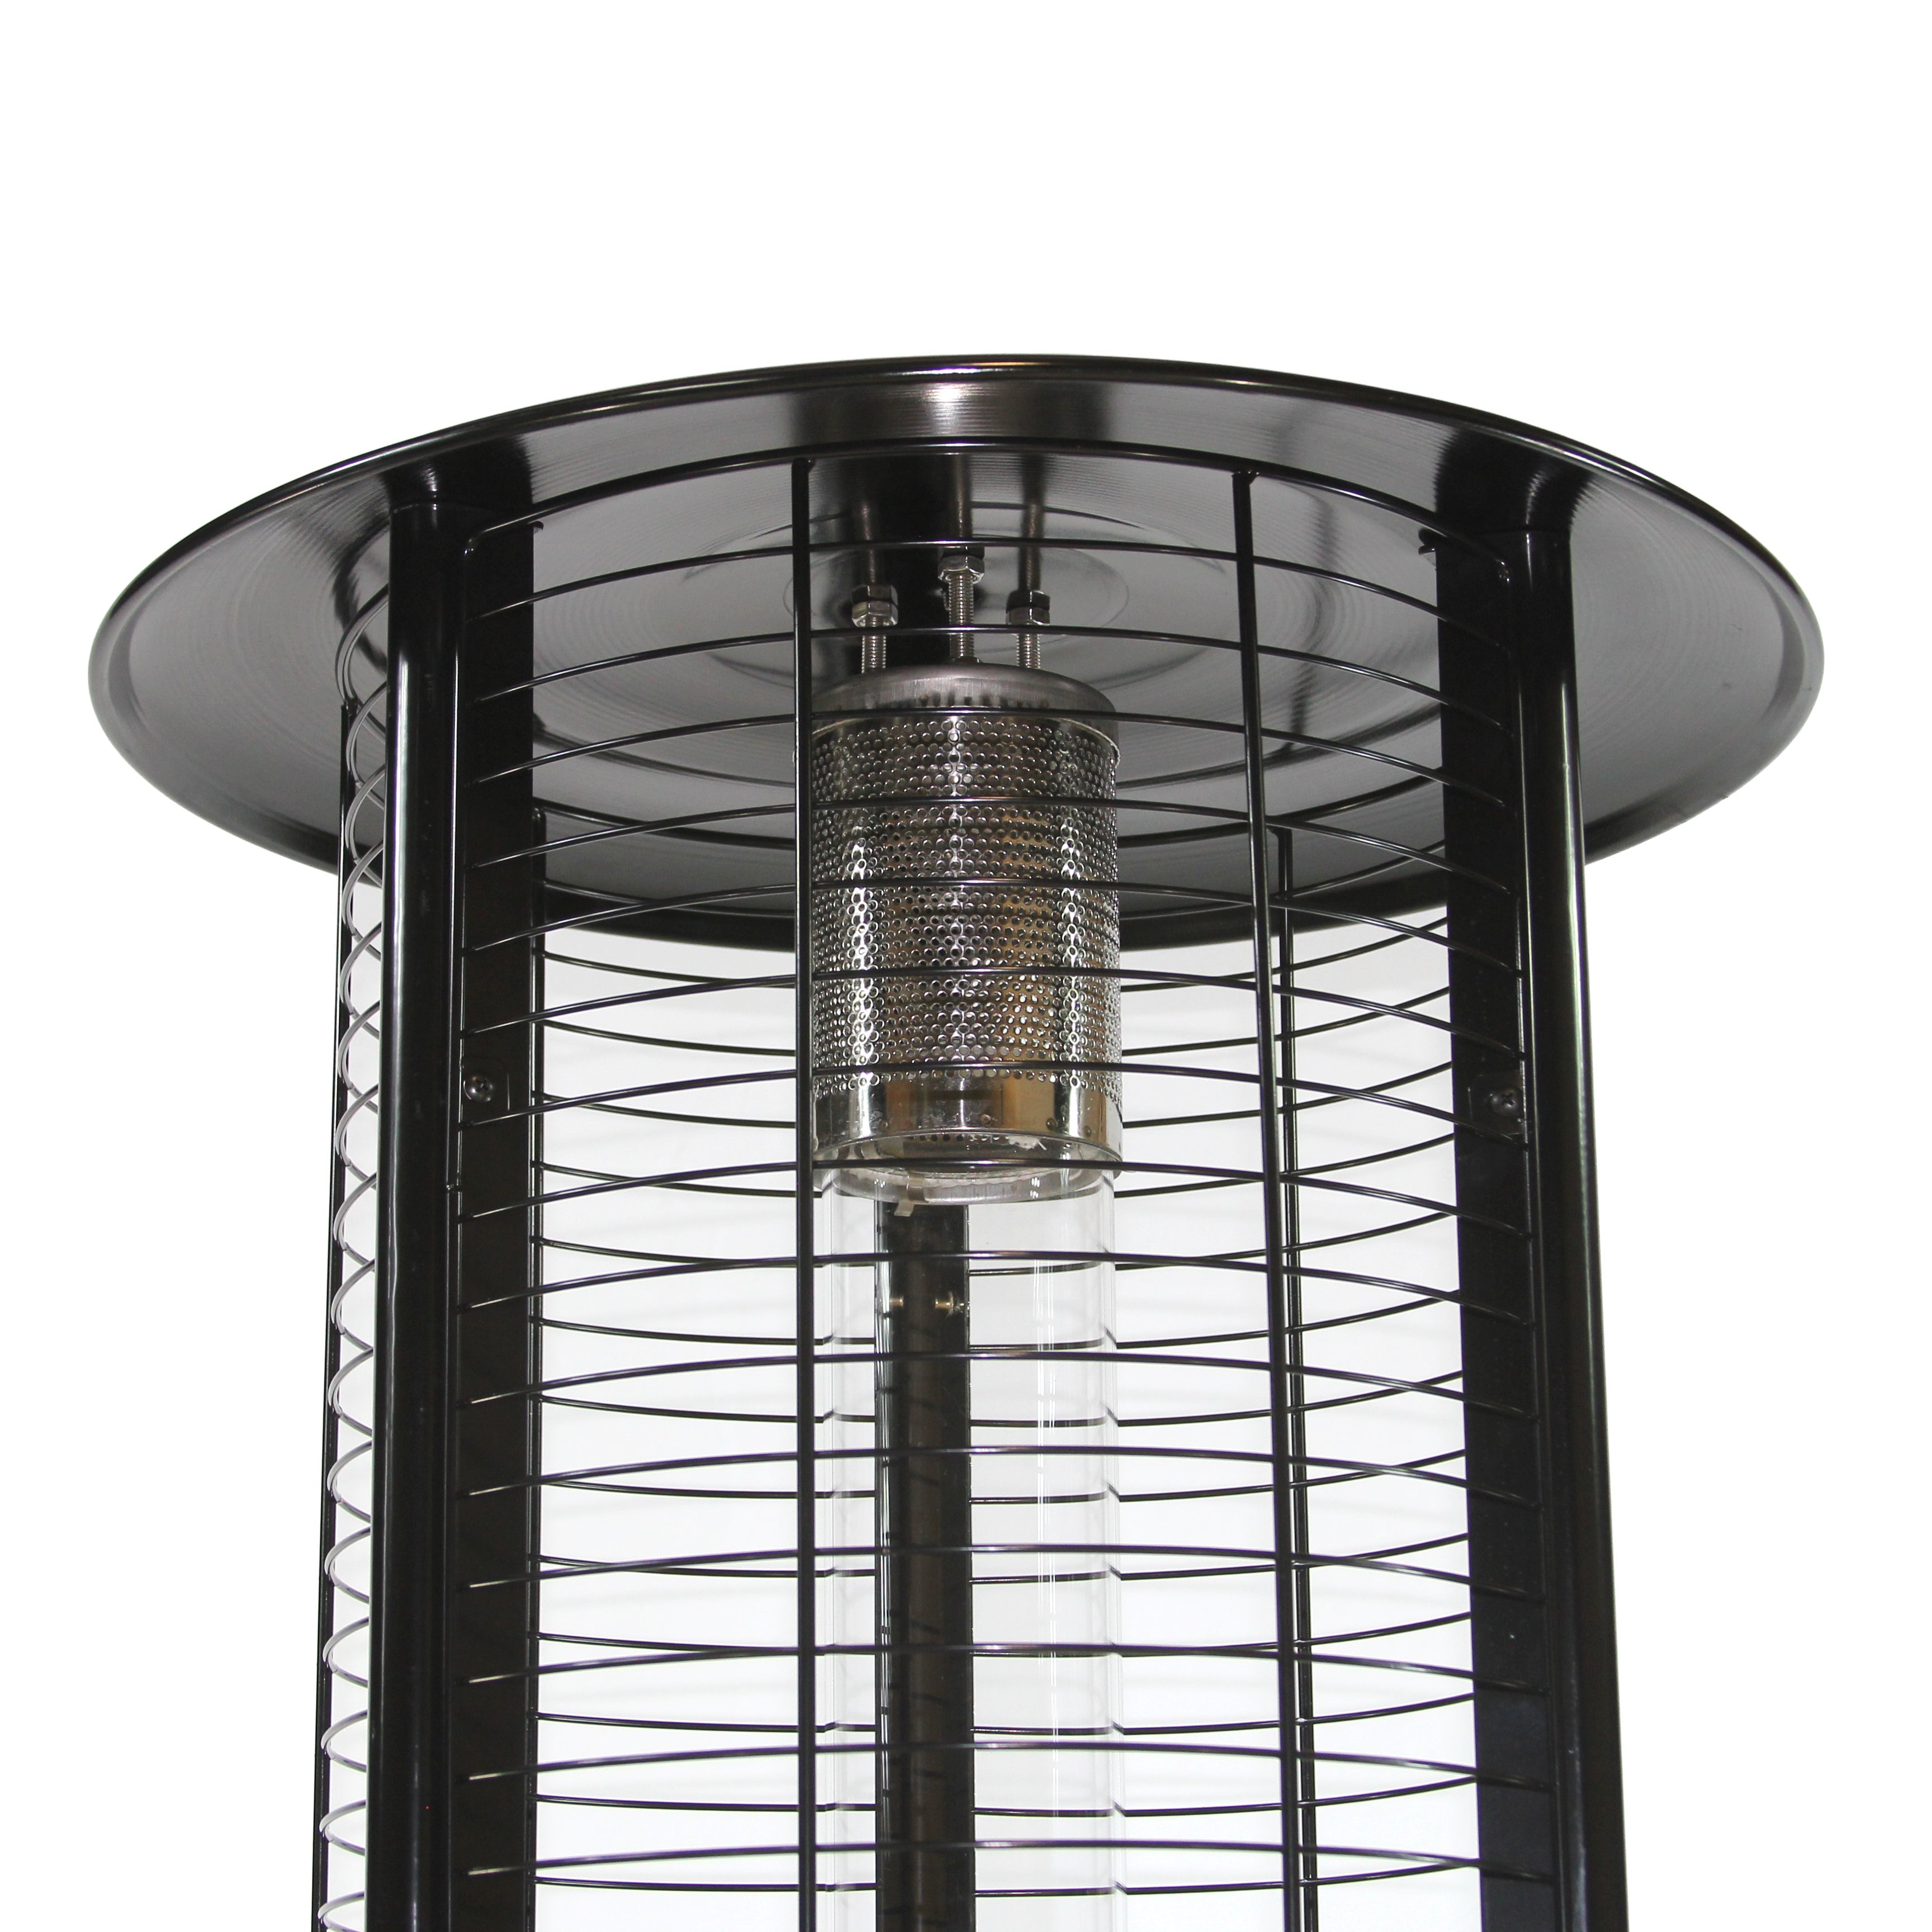 RADtec 80 Ellipse Flame Propane Patio Heater - Black with Clear Glass 41,000 BTU - 80-LLP-PT-HTR - Zoom Screen View